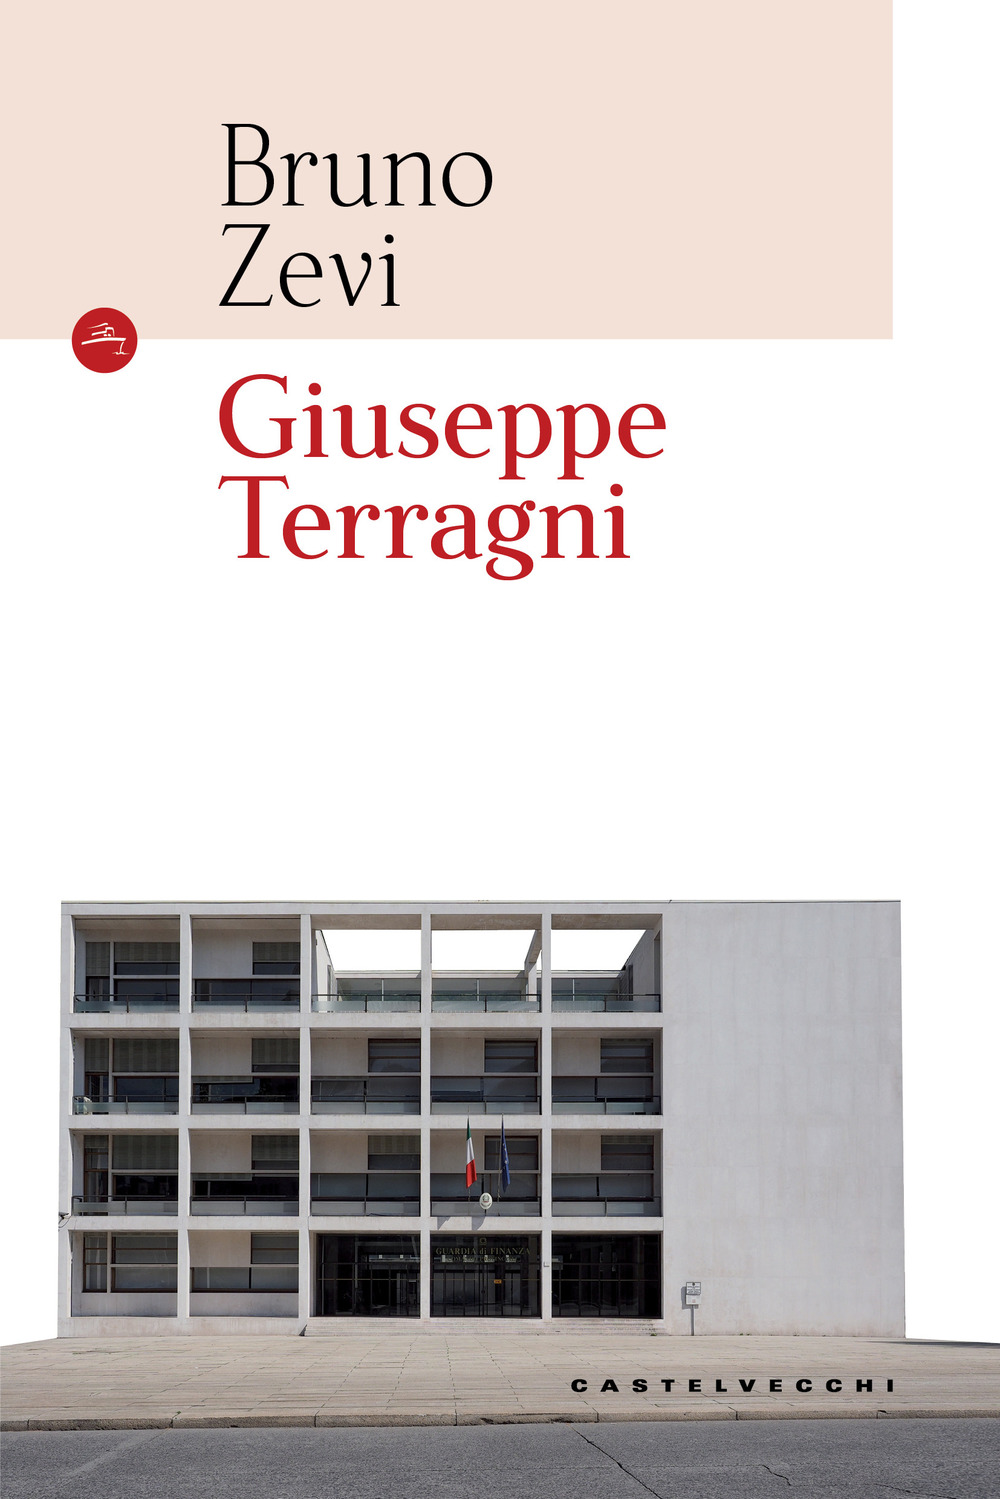 Giuseppe Terragni. Ediz. illustrata